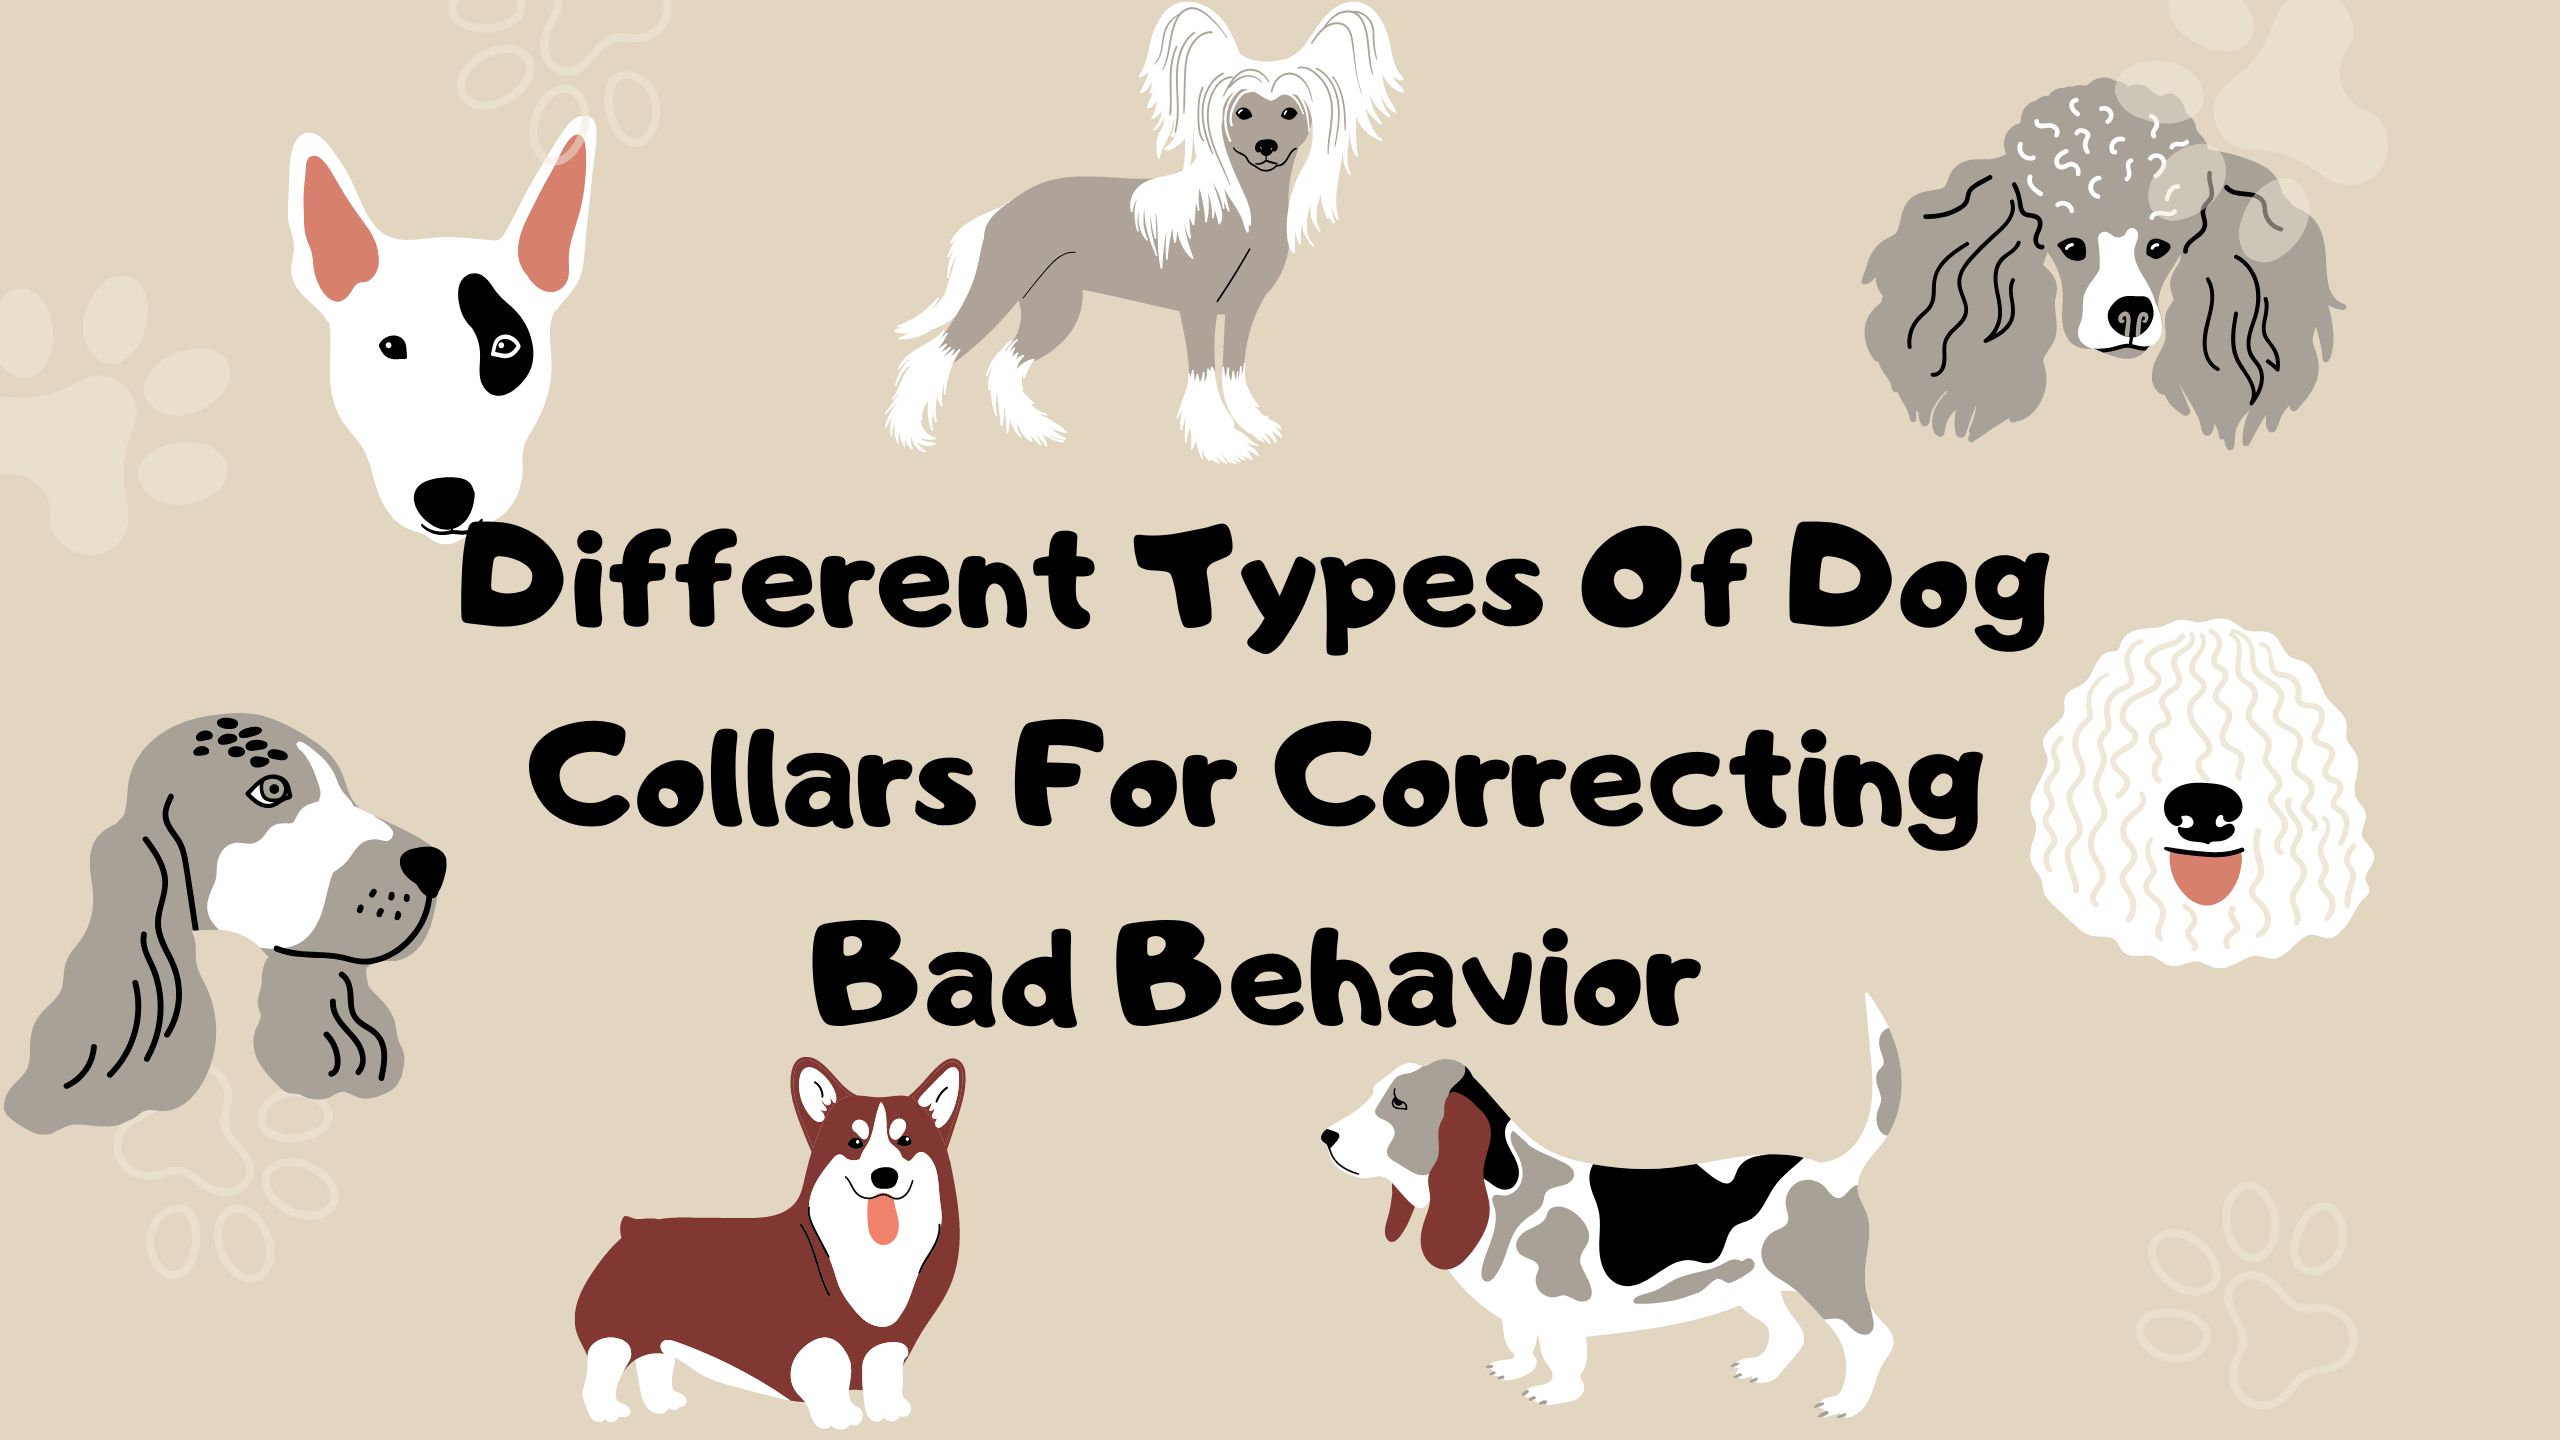 Dog Collars For Correcting Bad Behavior